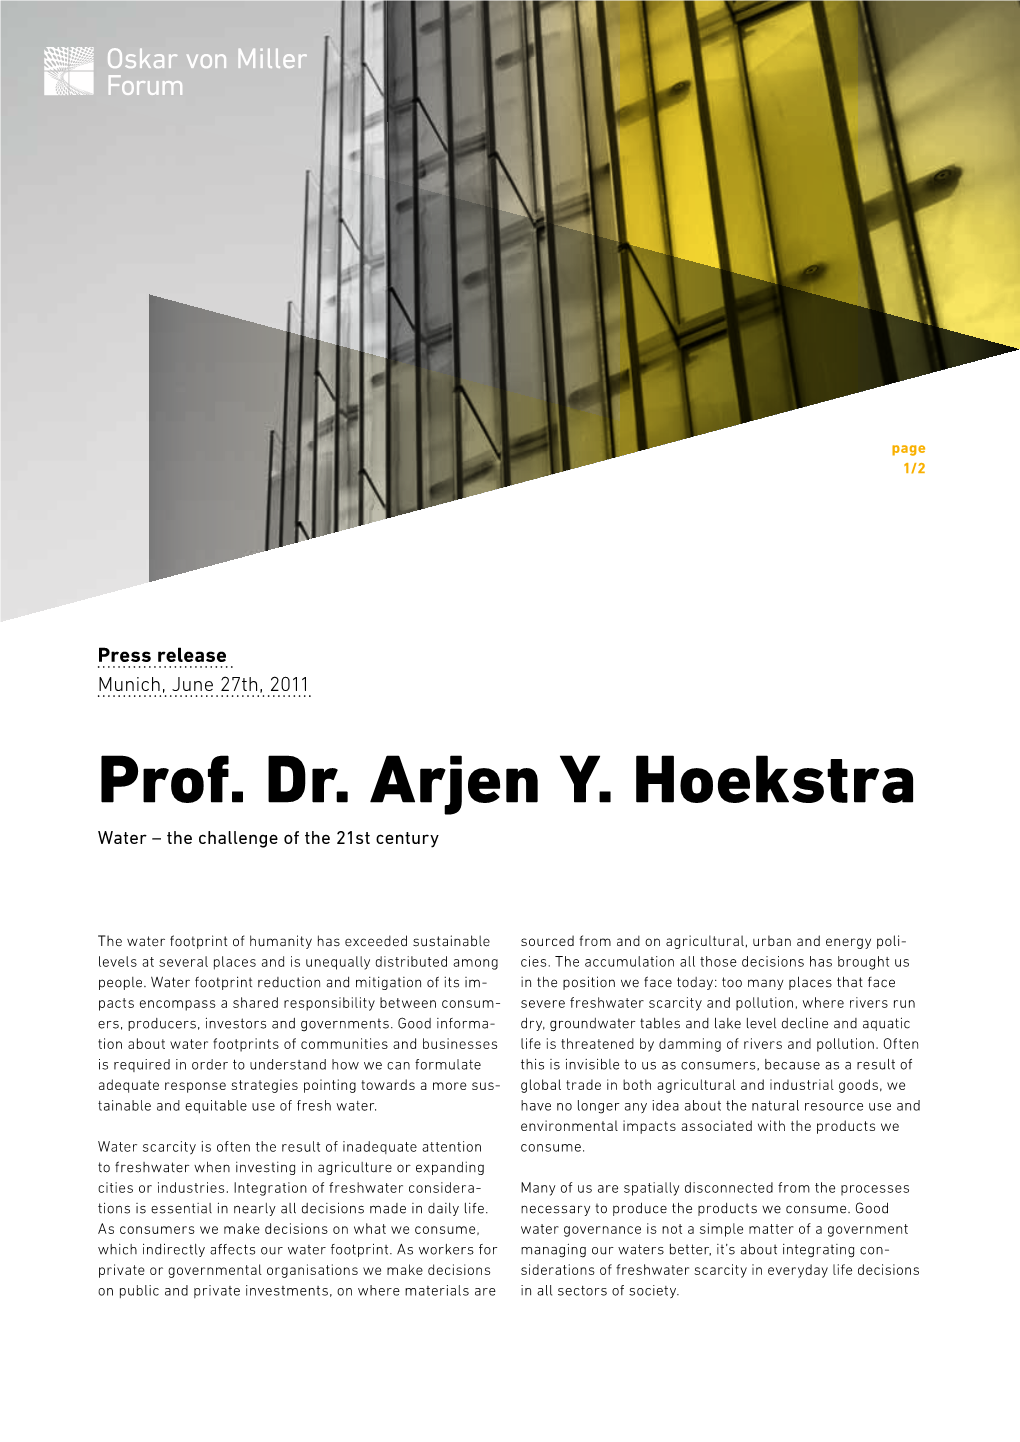 Prof. Dr. Arjen Y. Hoekstra Water – the Challenge of the 21St Century